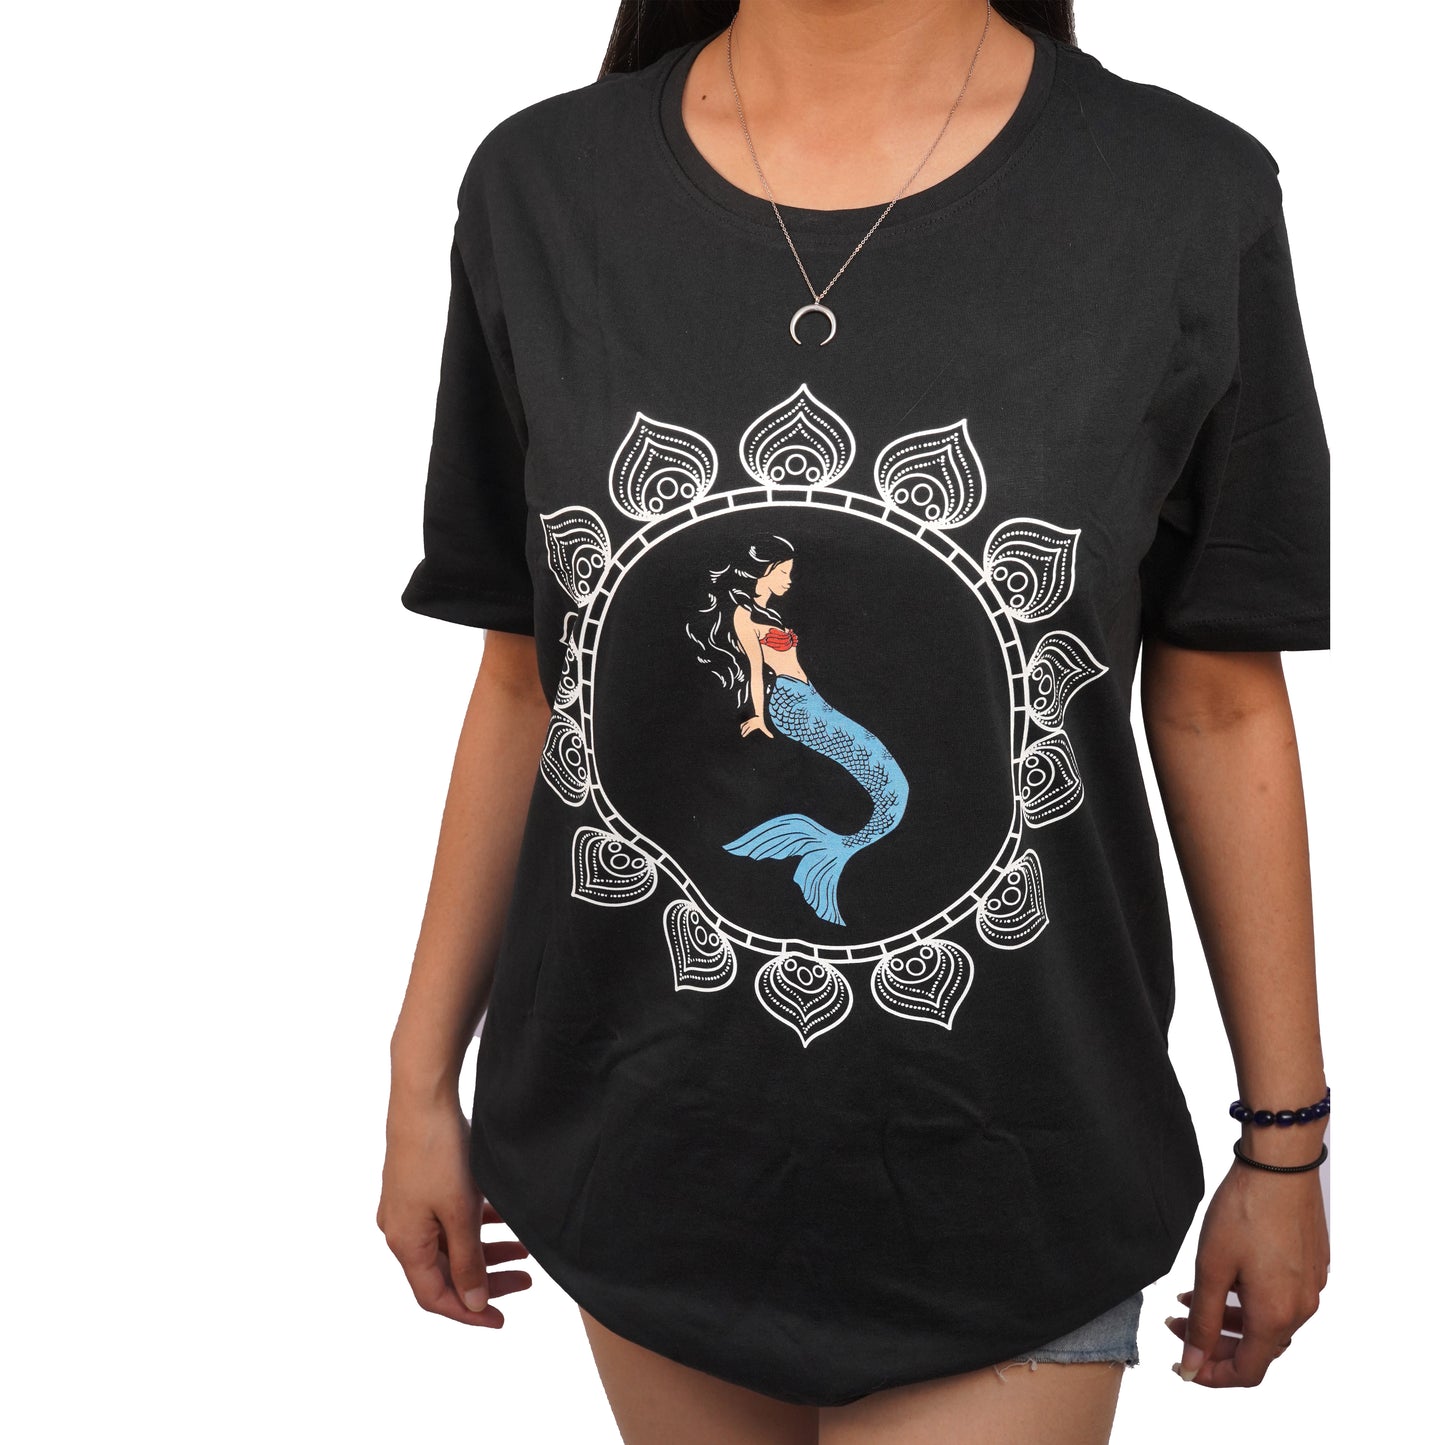 Nirvana Mermaid Printed T-shirt Black Color For Women/Girls